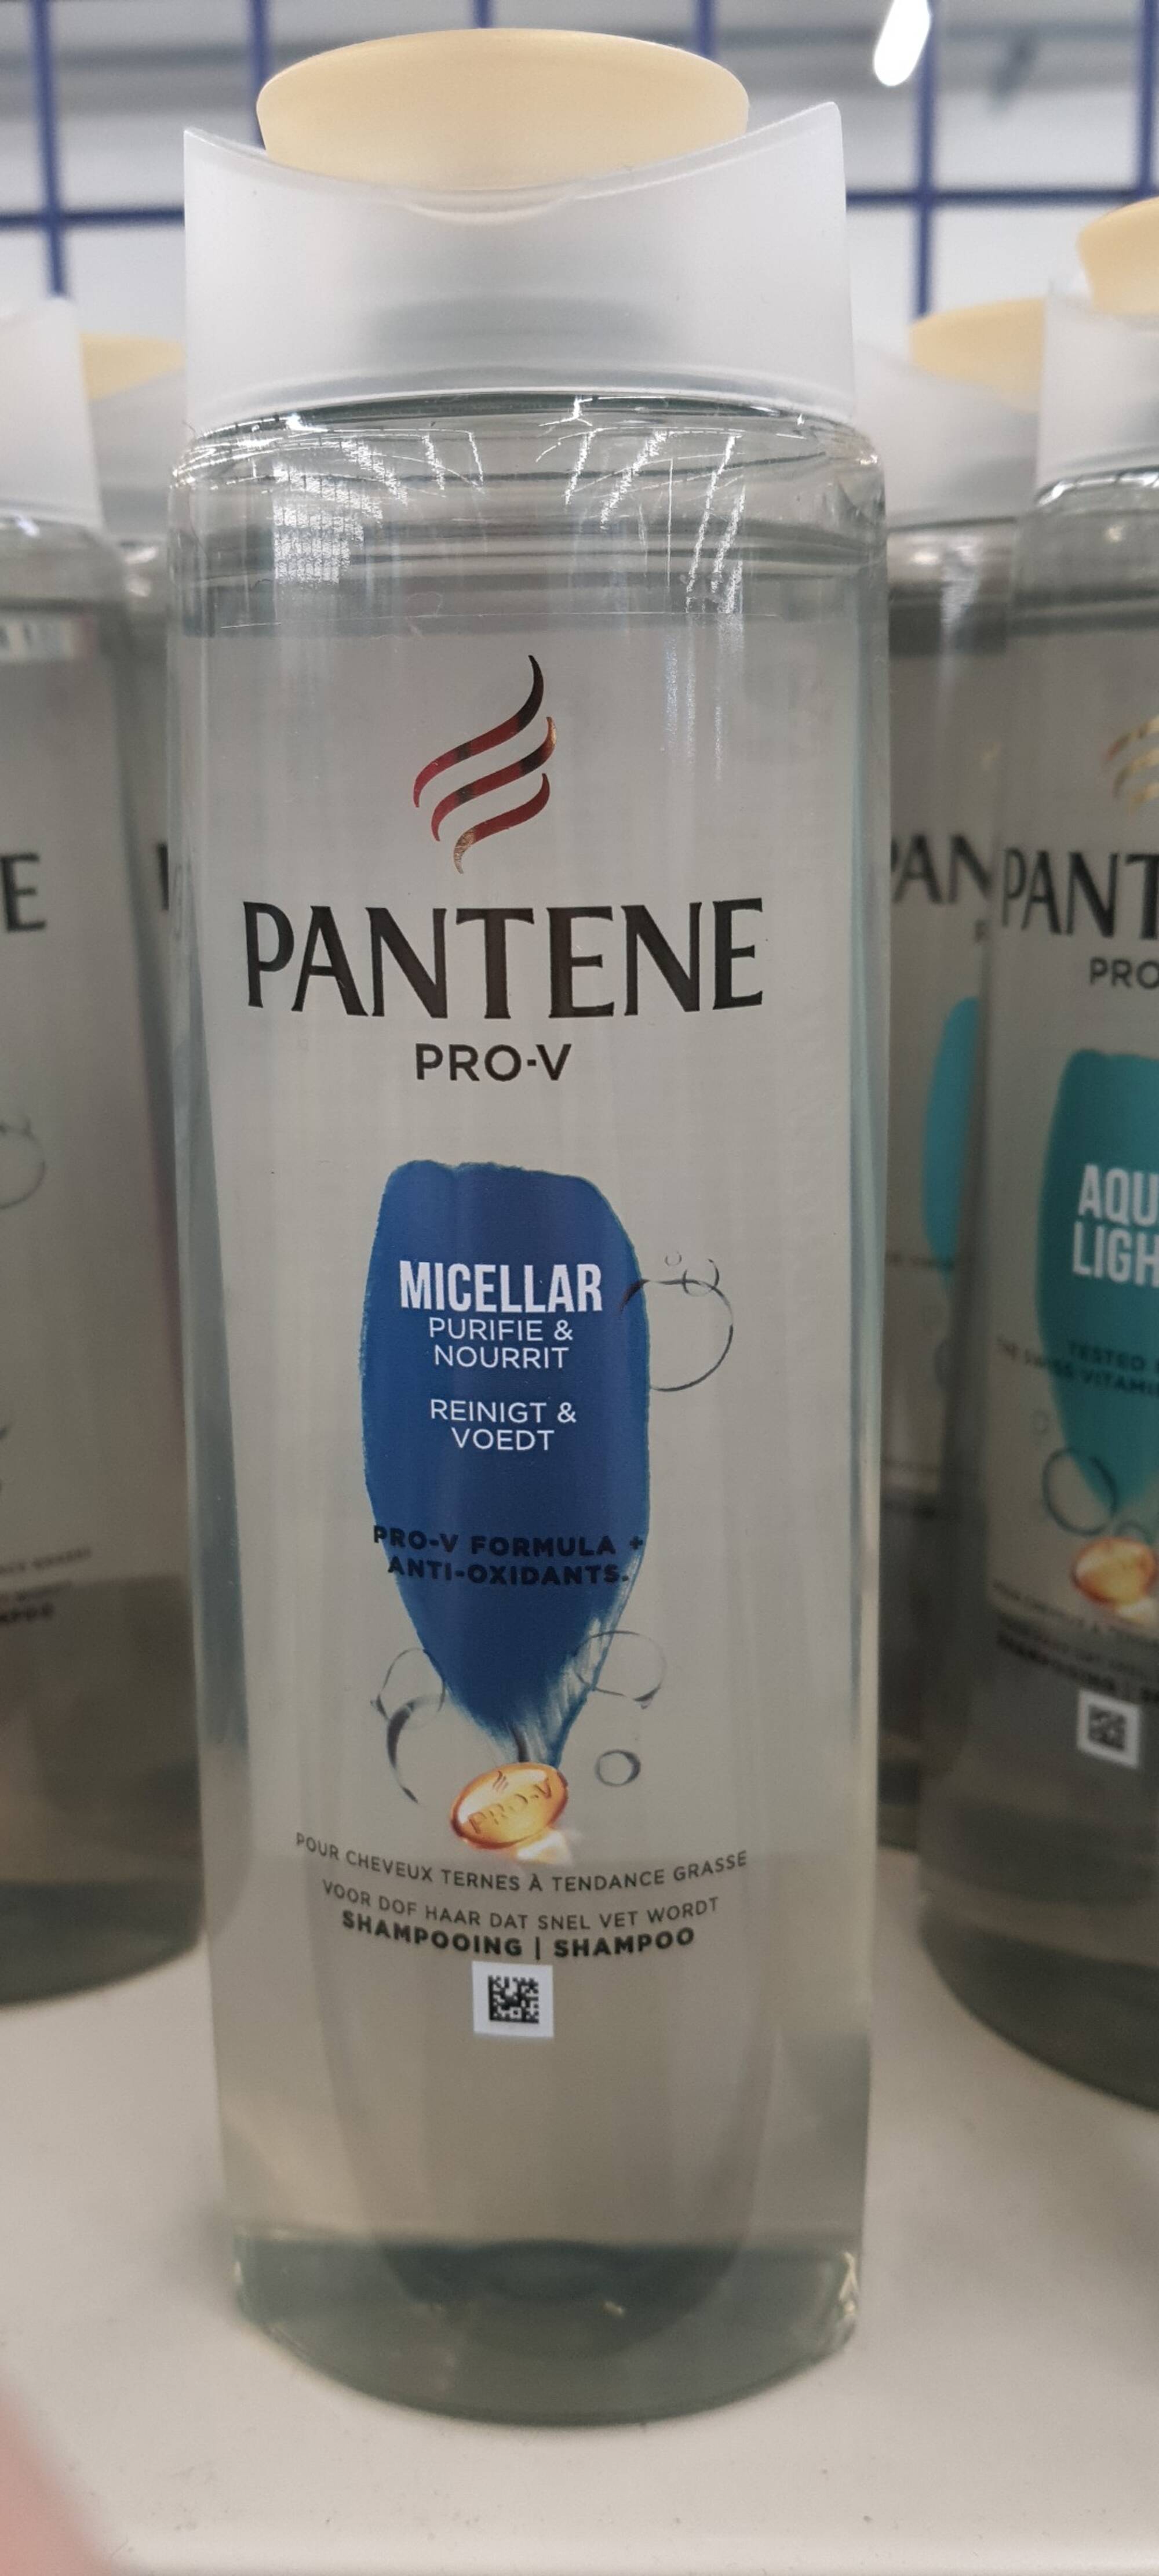 PANTENE - Prov-V - Micellar purifie & nourrit Shampooing